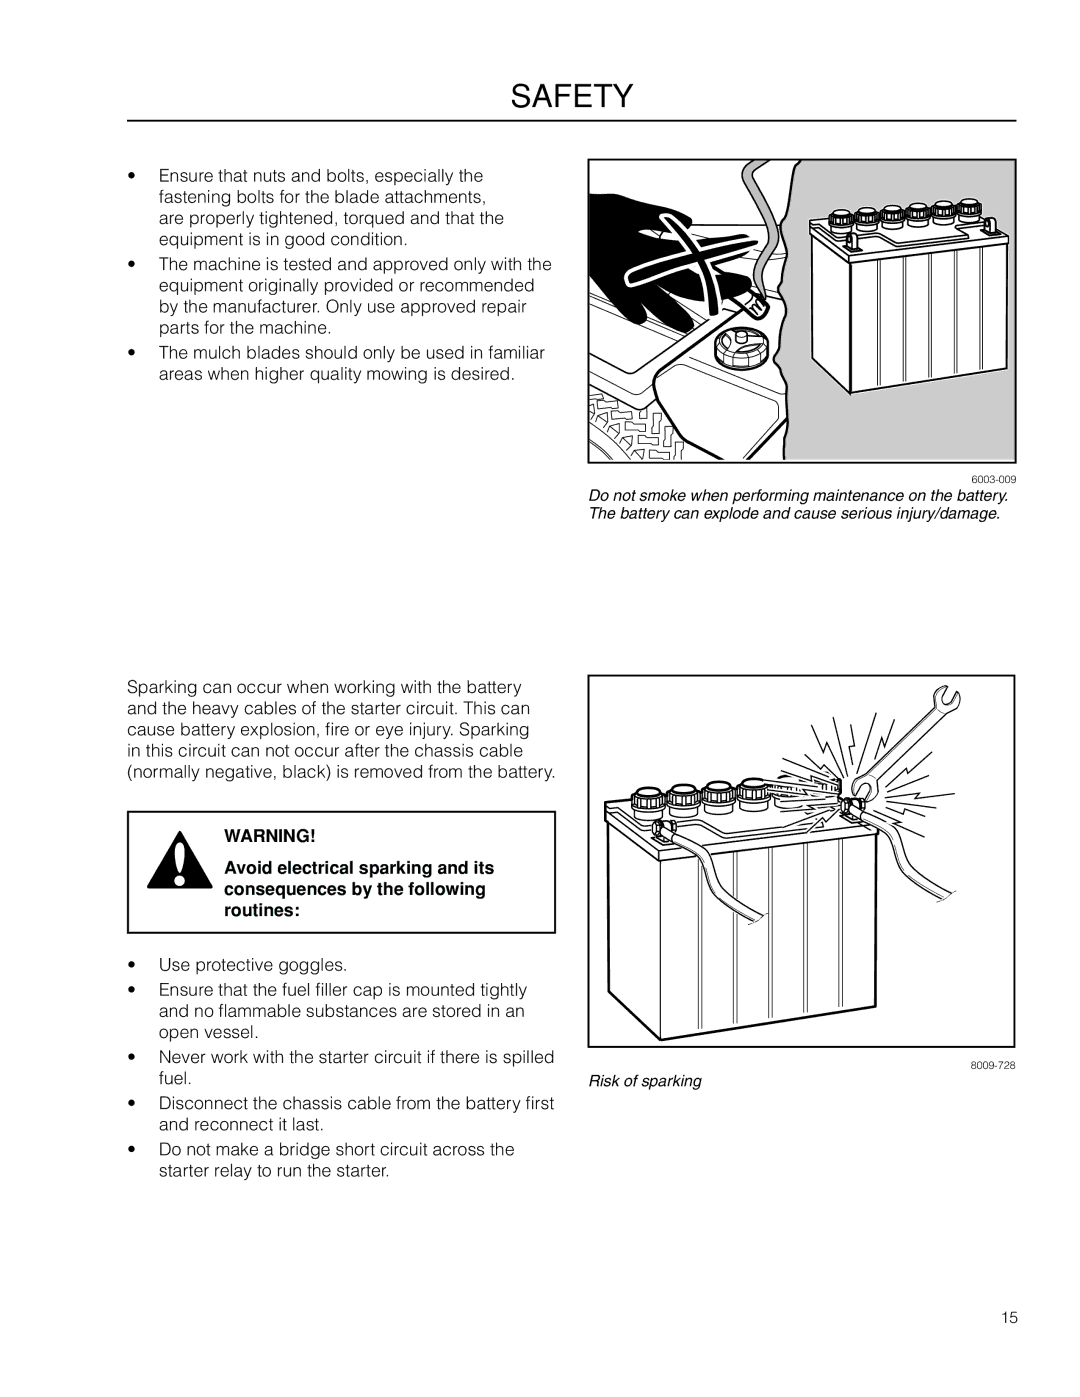 Dixon 966057501, SE 5225 KOH CE manual Risk of sparking 